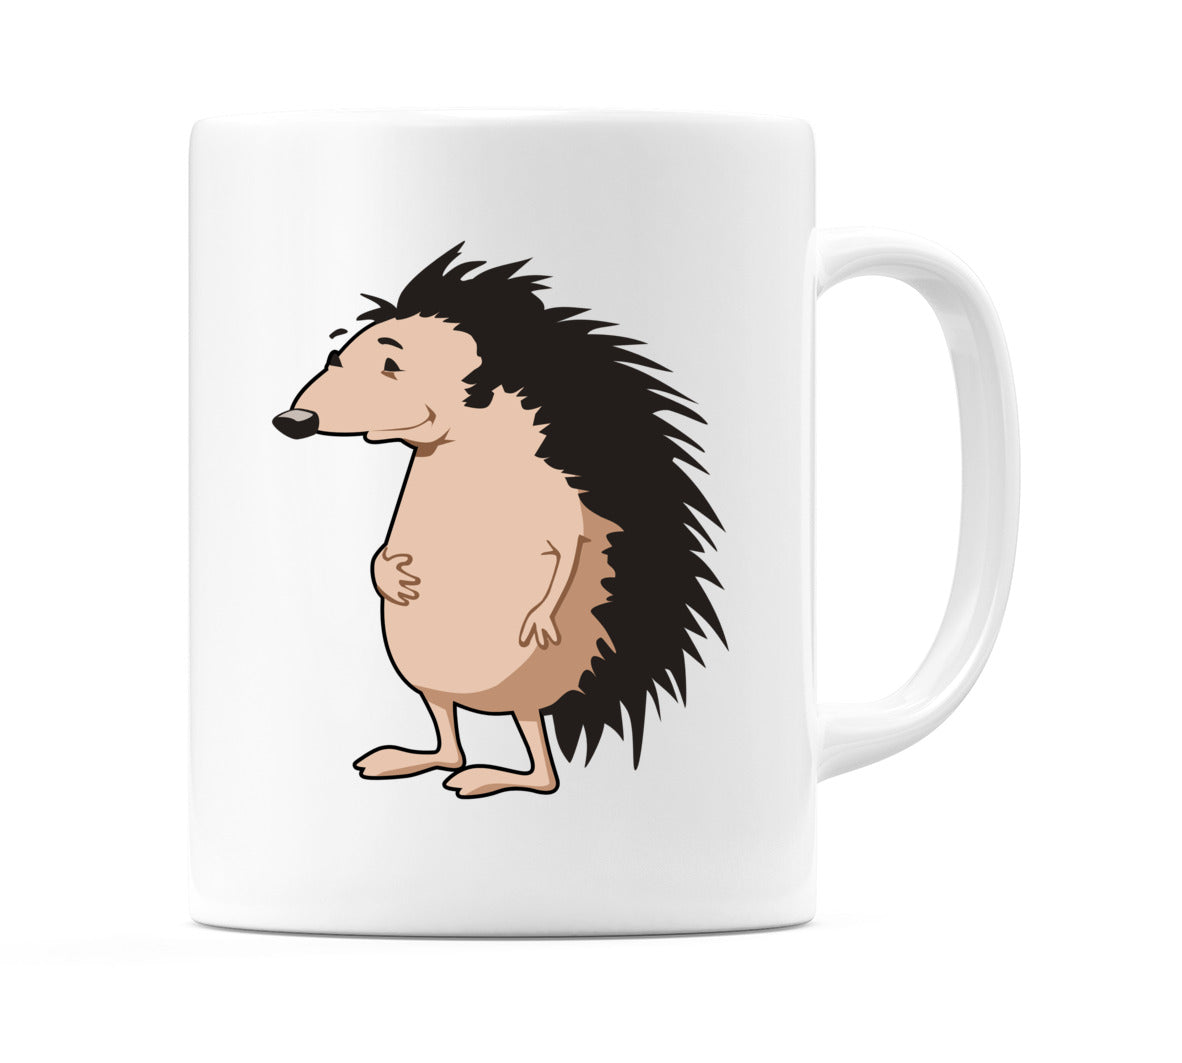 Cute Hedgehog Mug